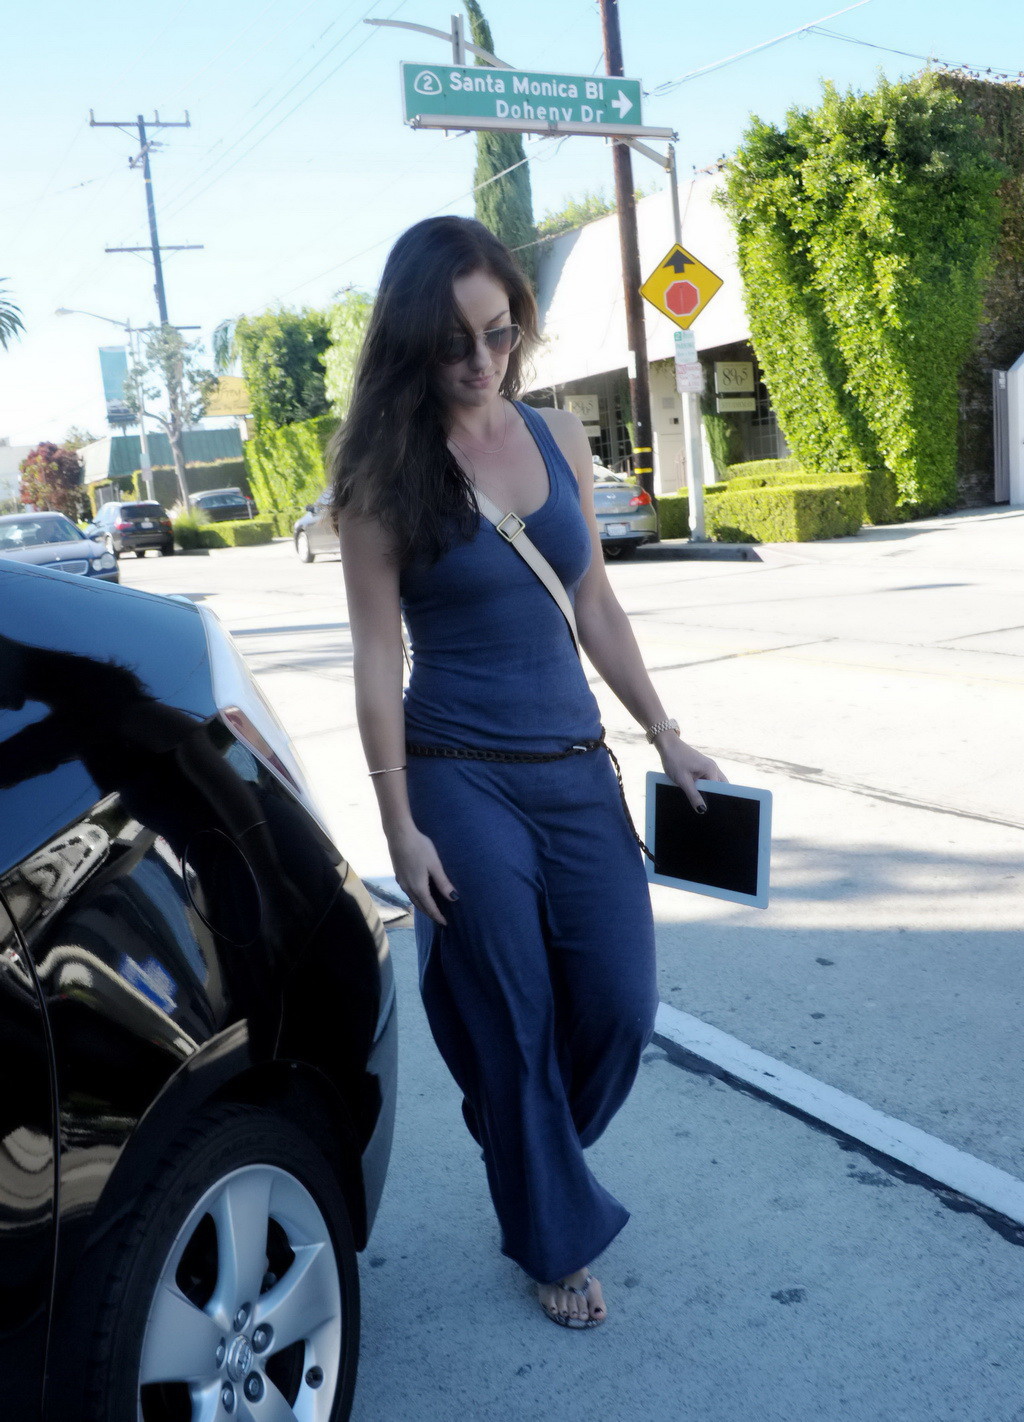 Minka Kelly braless shows hard pokies in tight gray dress while leaving a salon  #75249843